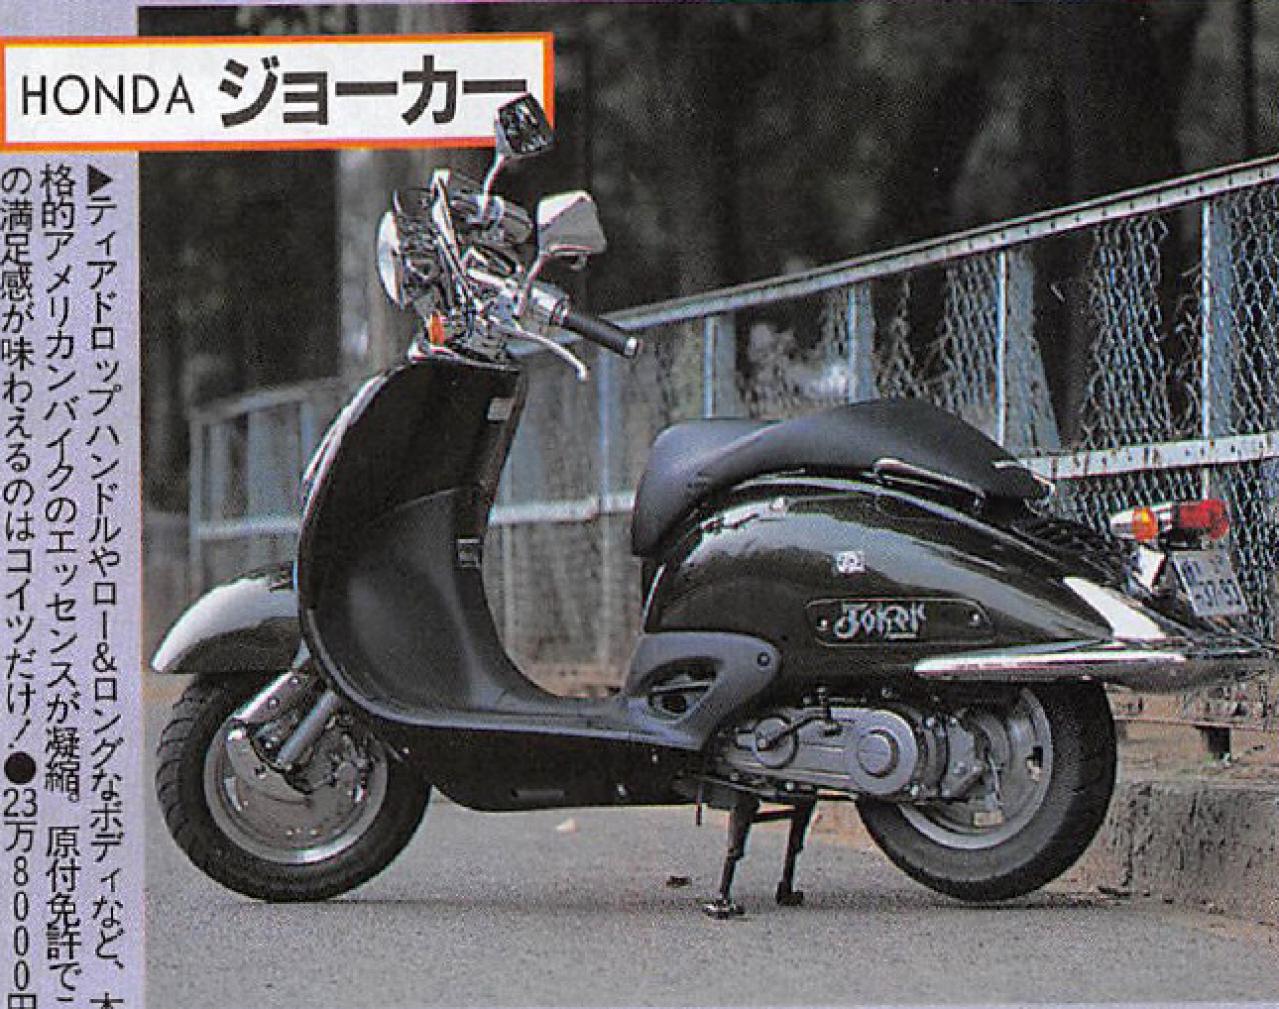 HONDA ホンダ ジョーカー 大型アメリカン バイク 原付 50ccMincoショップ商品一覧